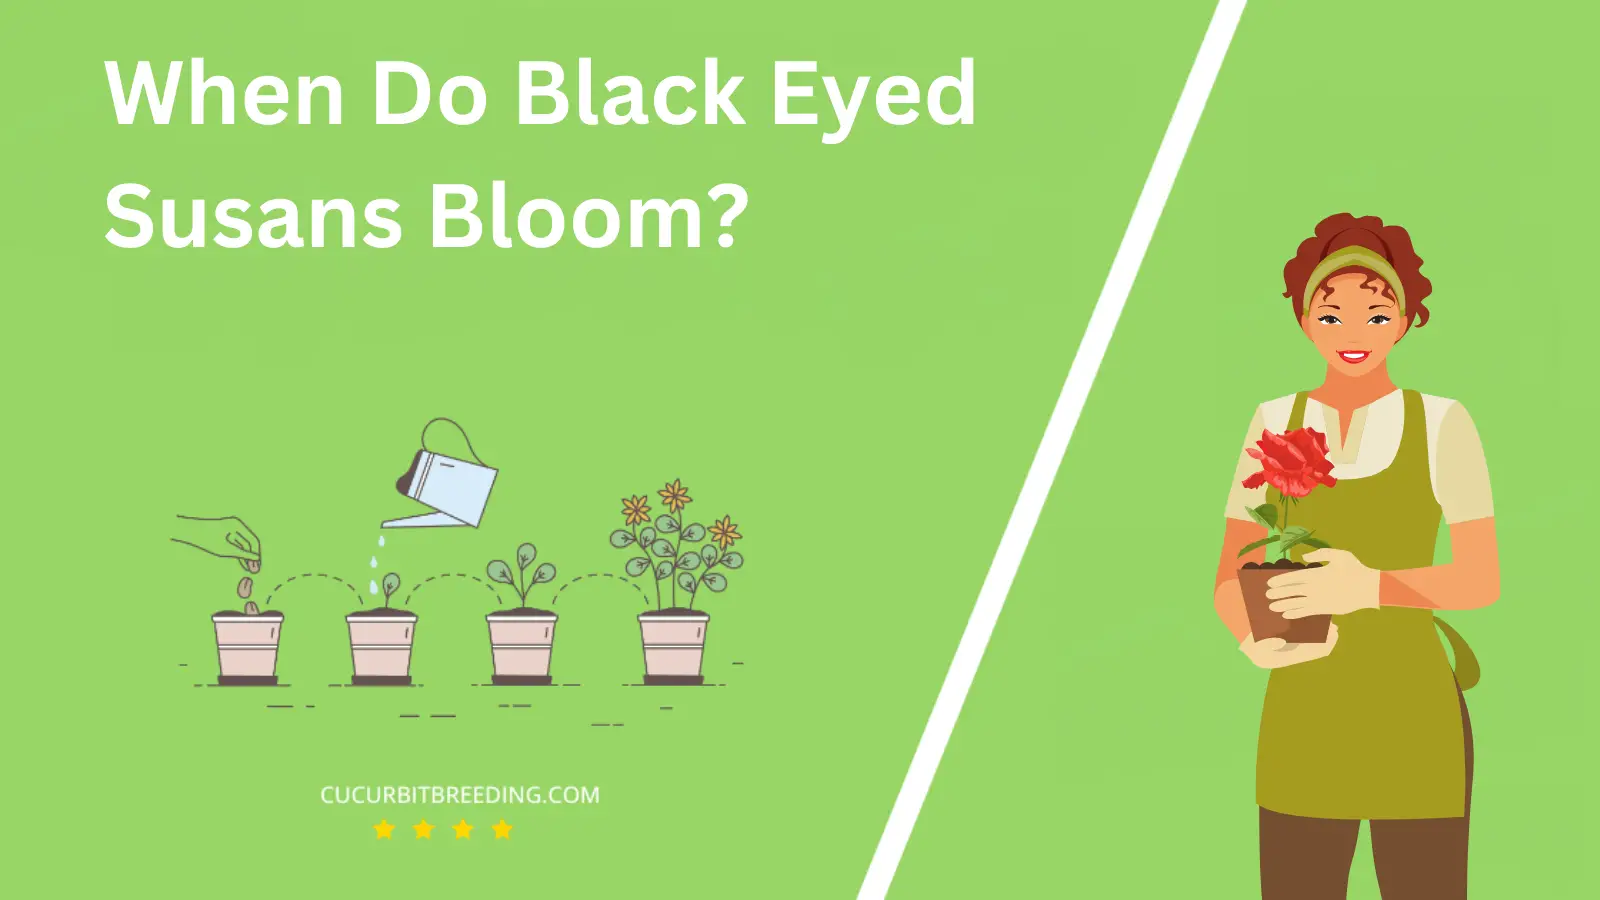 When Do Black Eyed Susans Bloom?